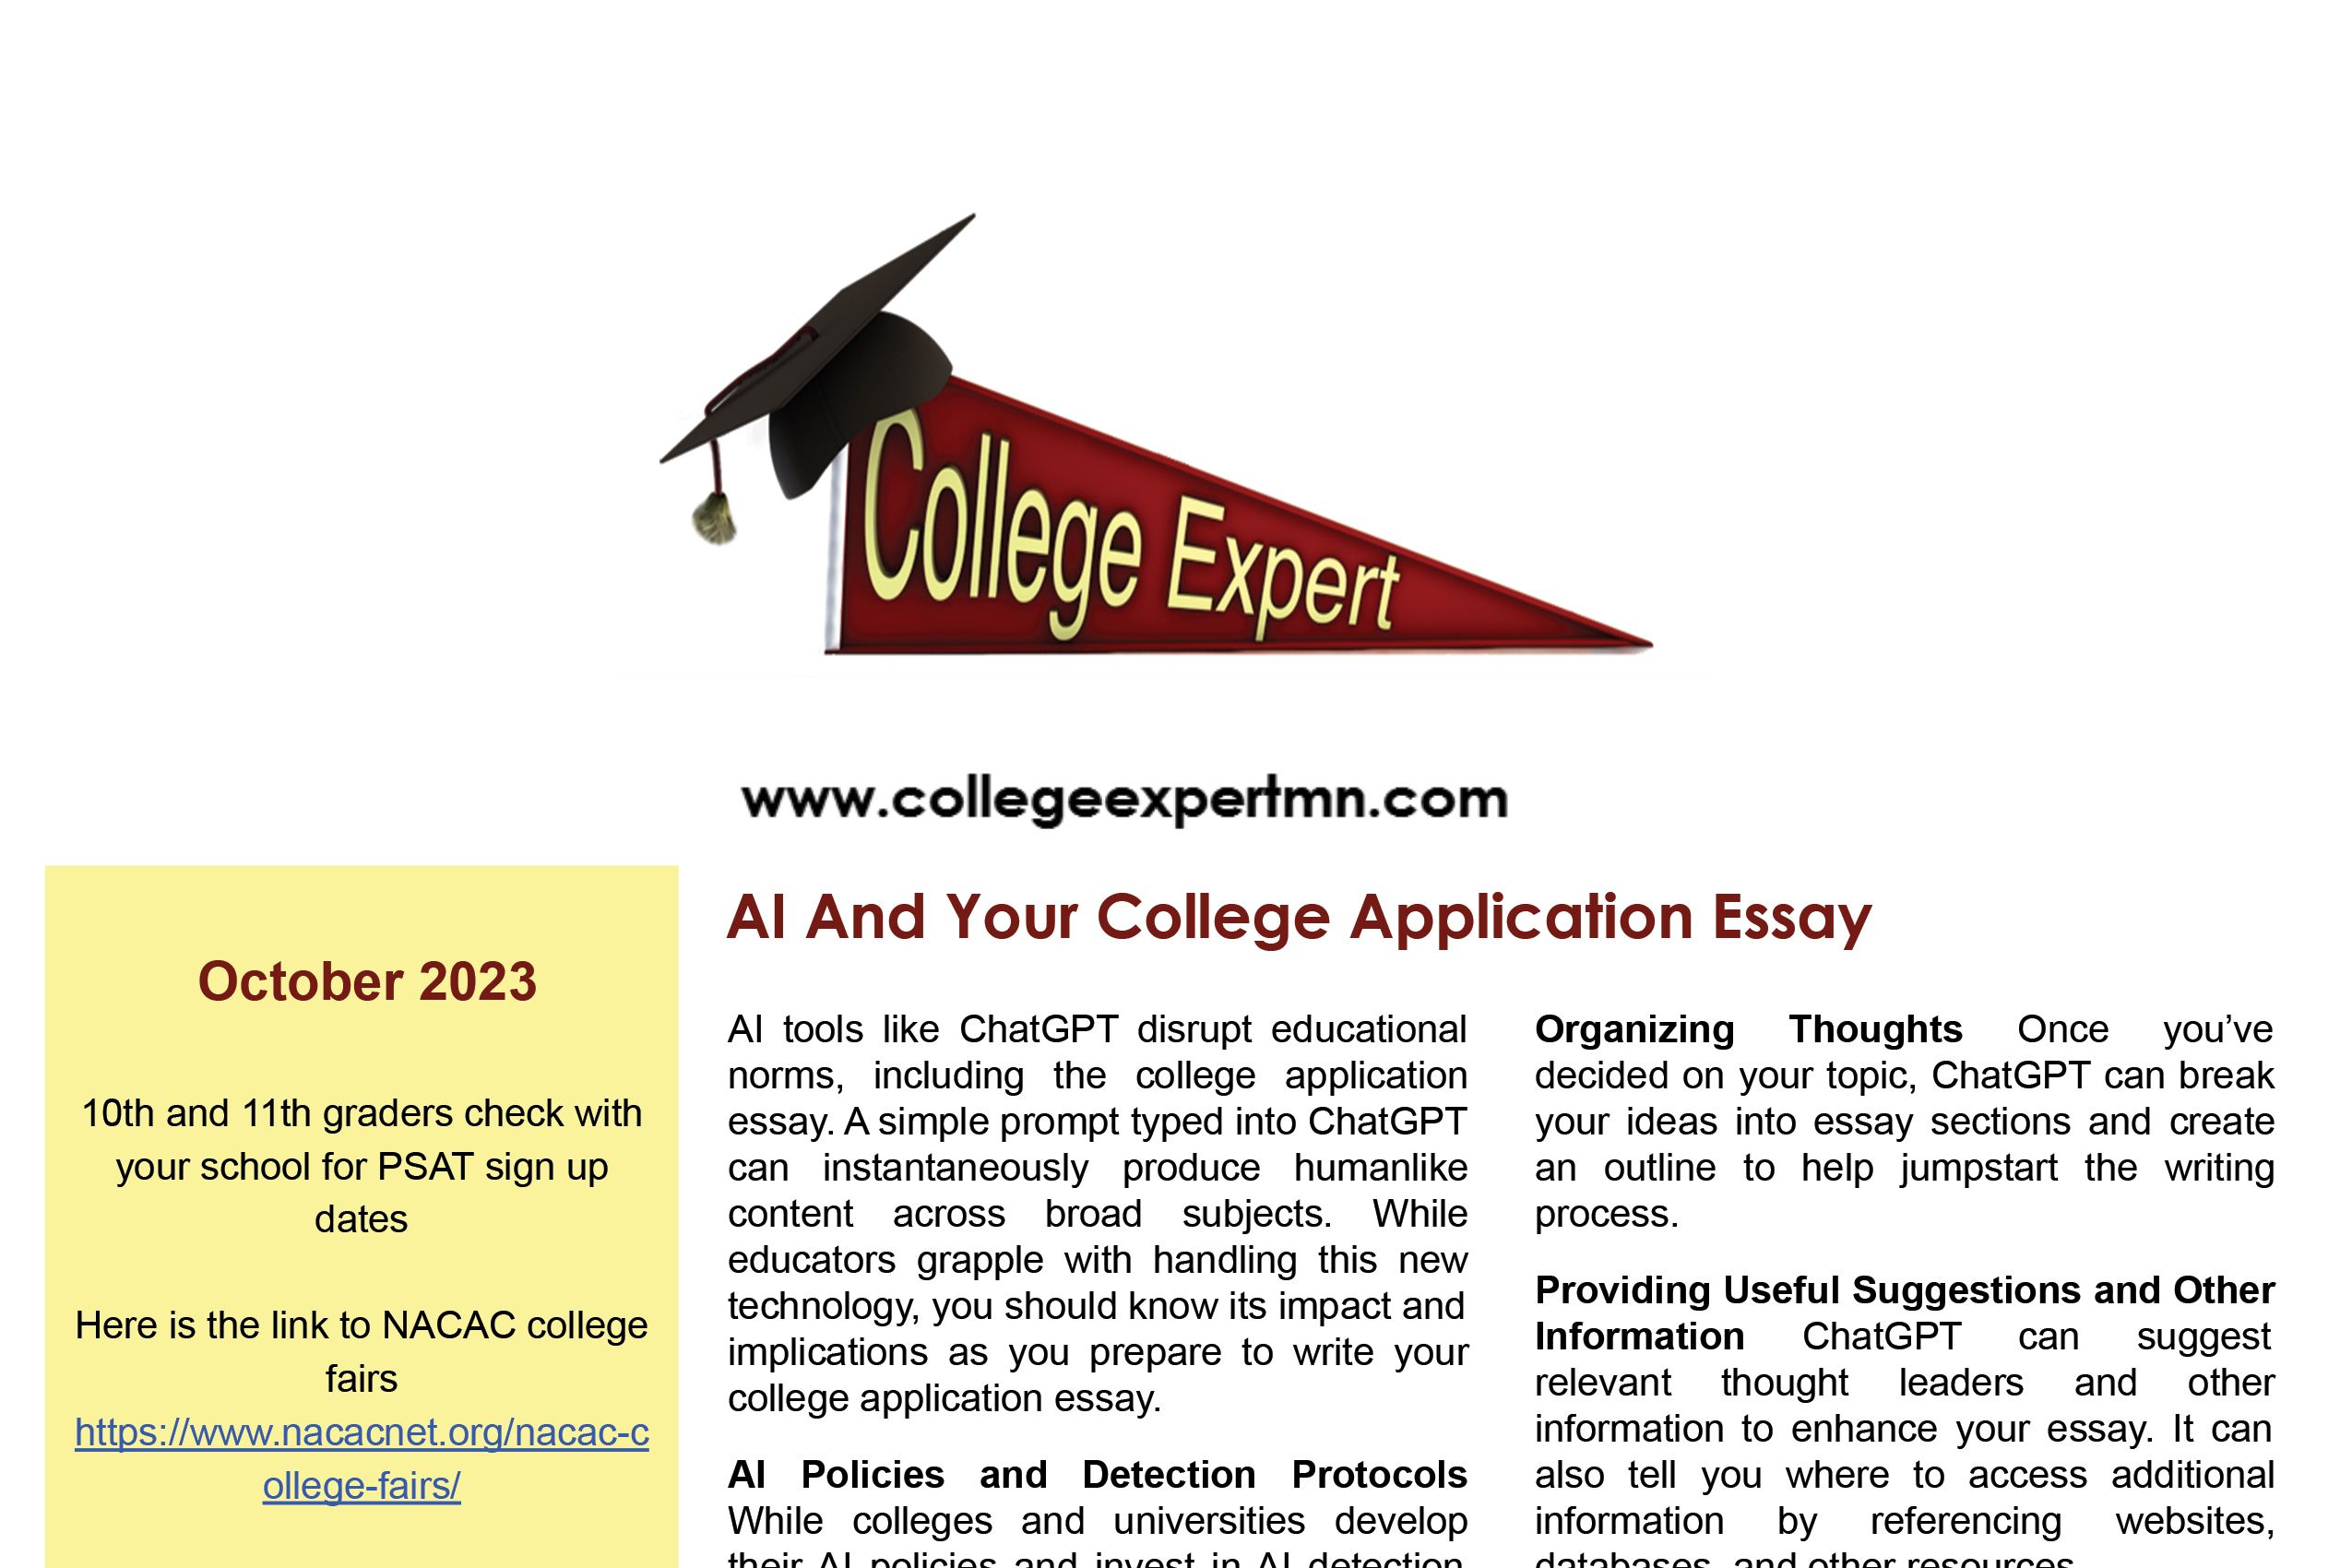 October 2023 College Expert Newsletter